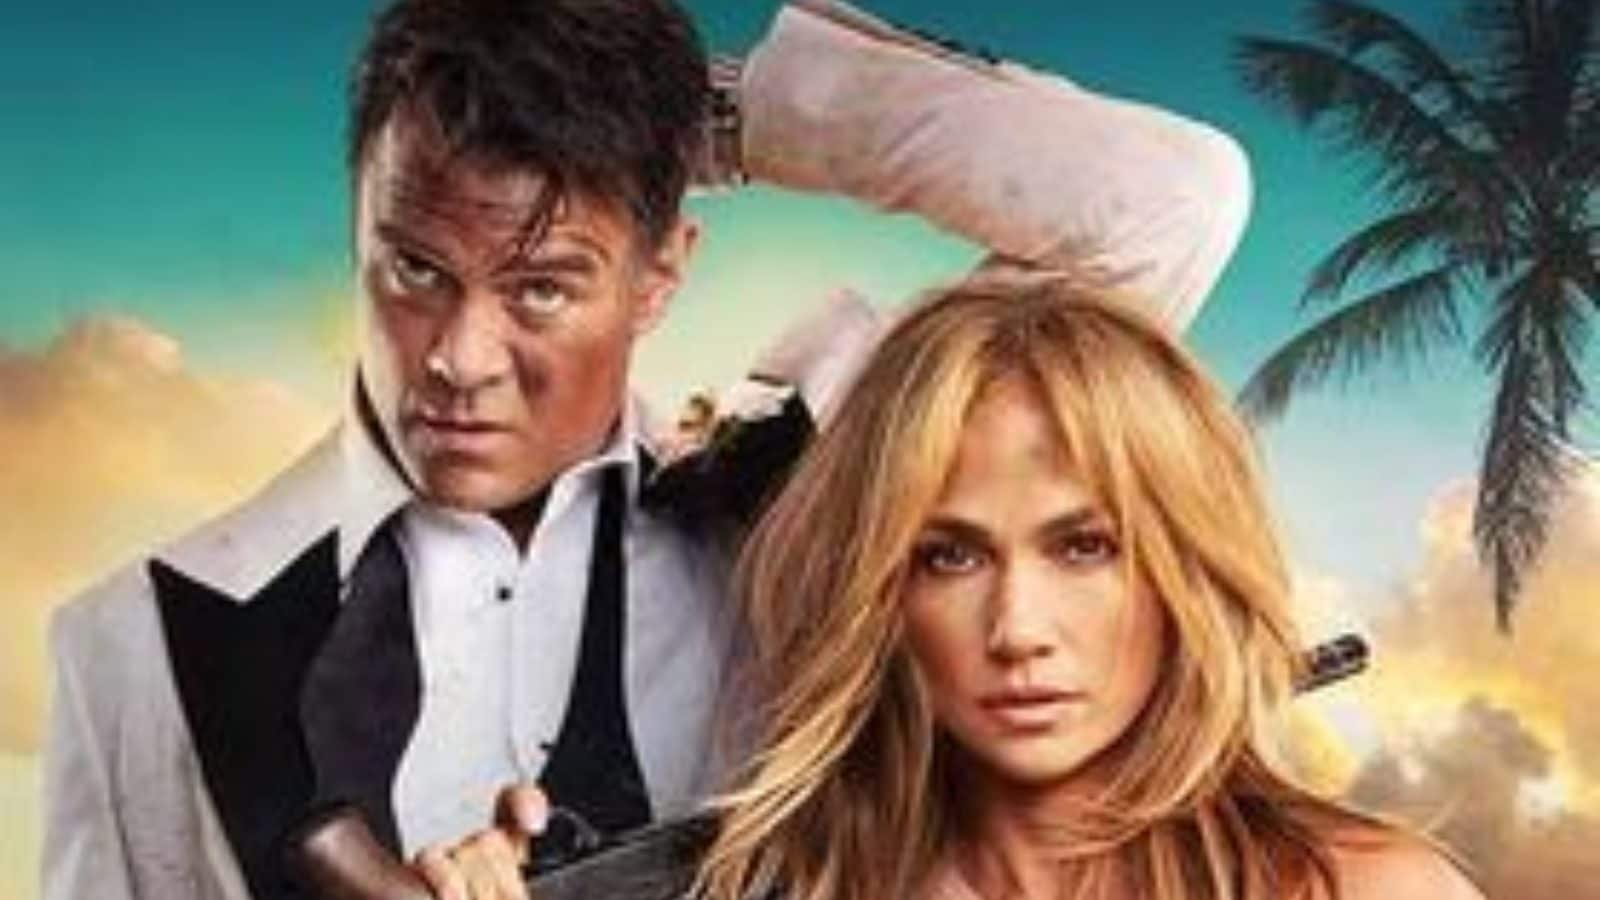 Shotgun Wedding Review Jennifer Lopez And Josh Duhamels Film Is Lukewarm But Entertaining 